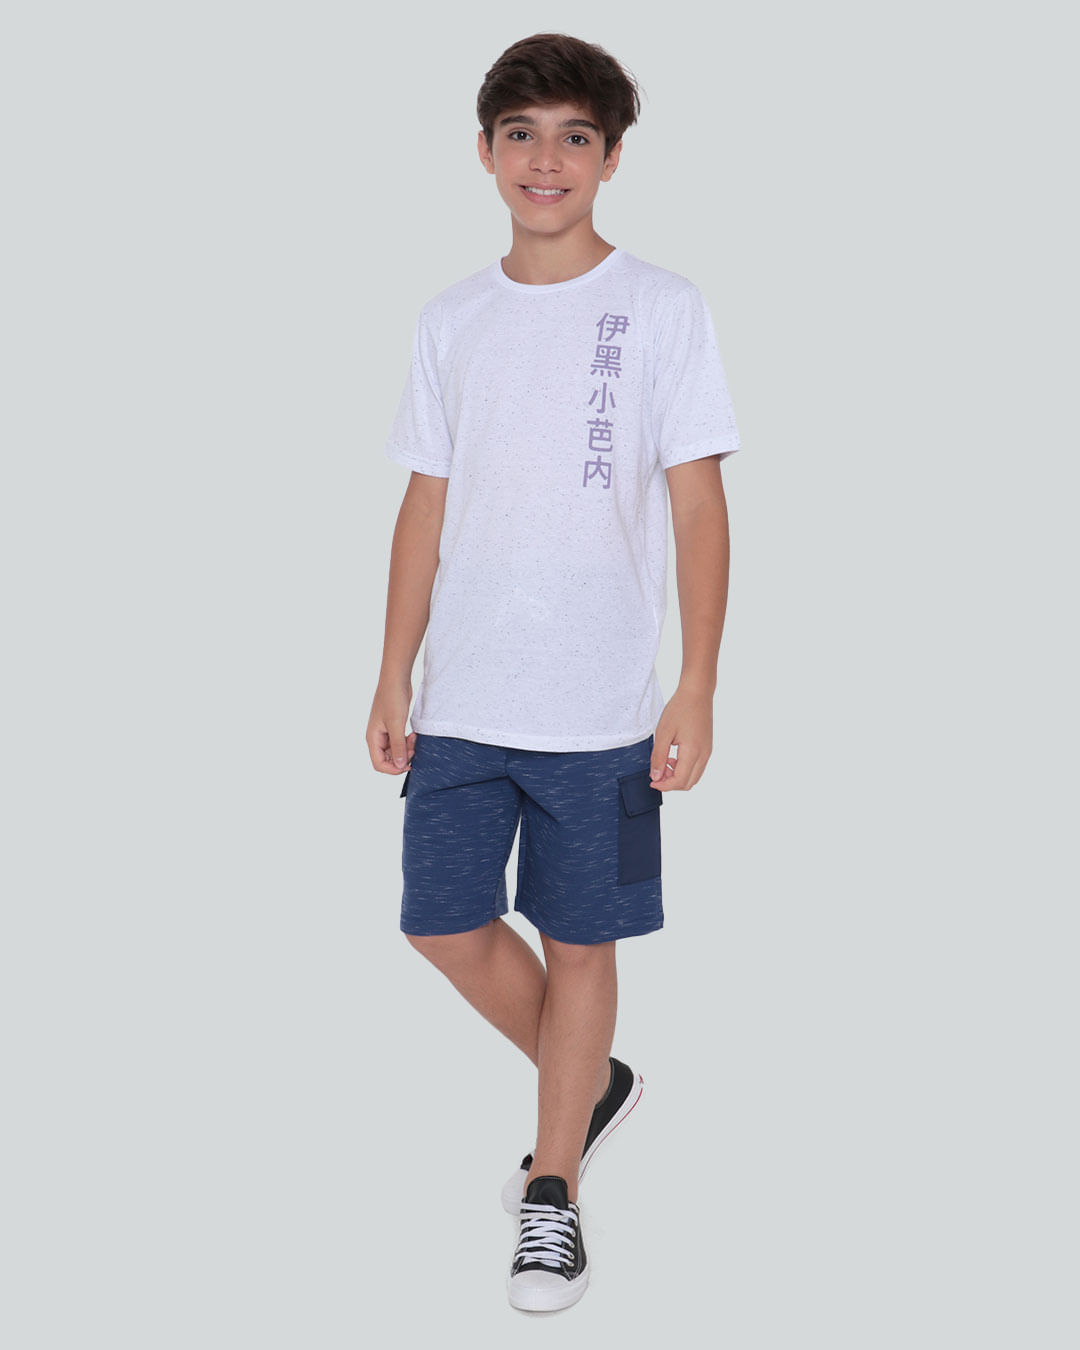 Camiseta-Juvenil-Botone-Anime-Branca